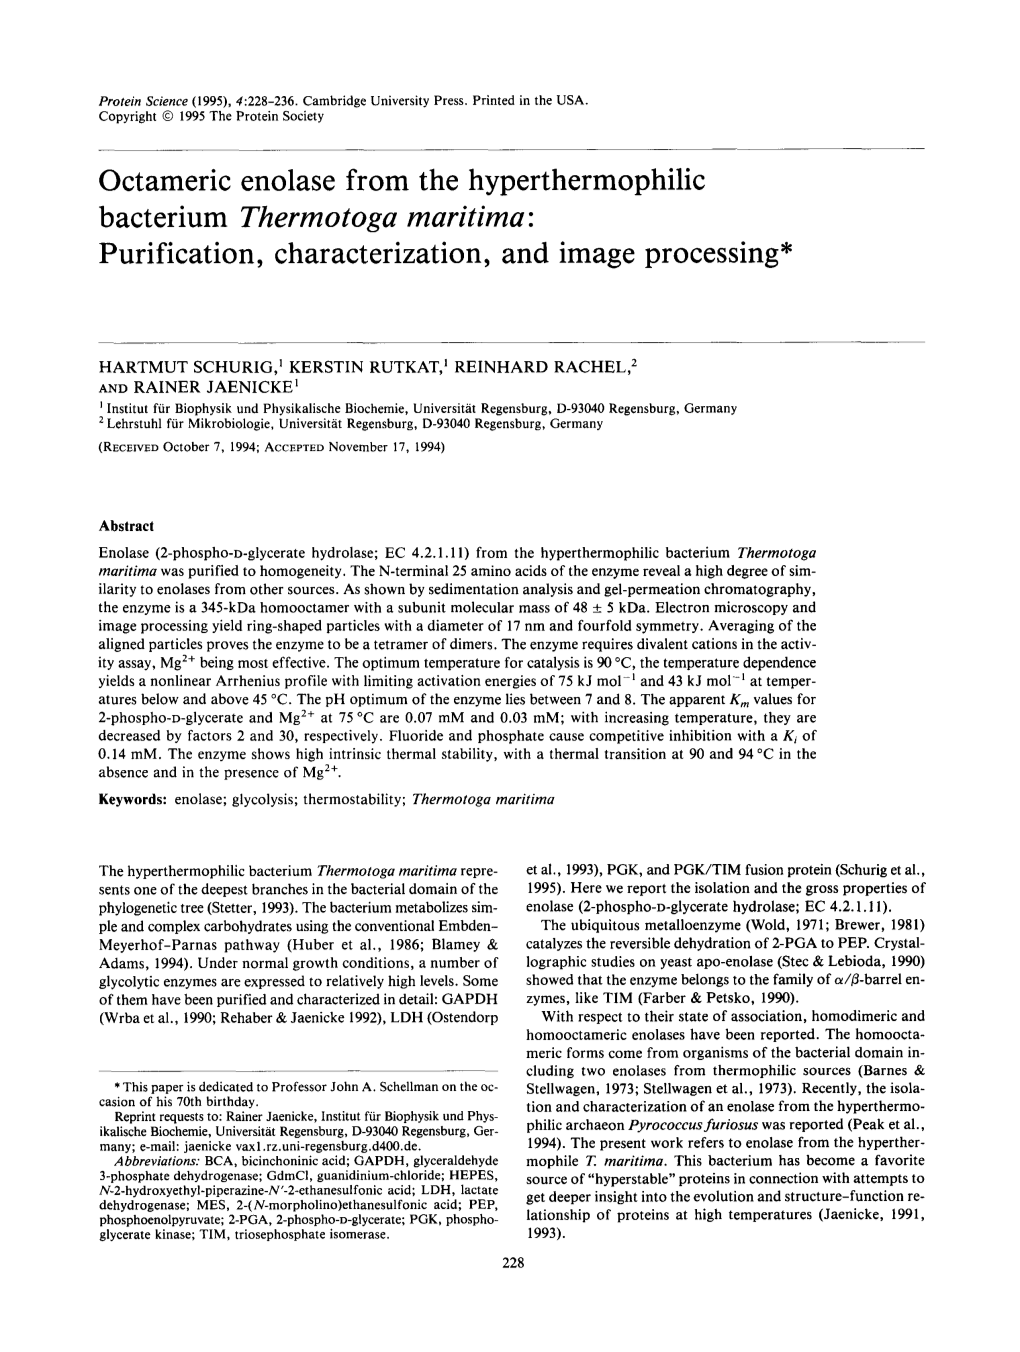 Bacterium Thermotoga Maritima: Purification, Characterization, and Image Processing*